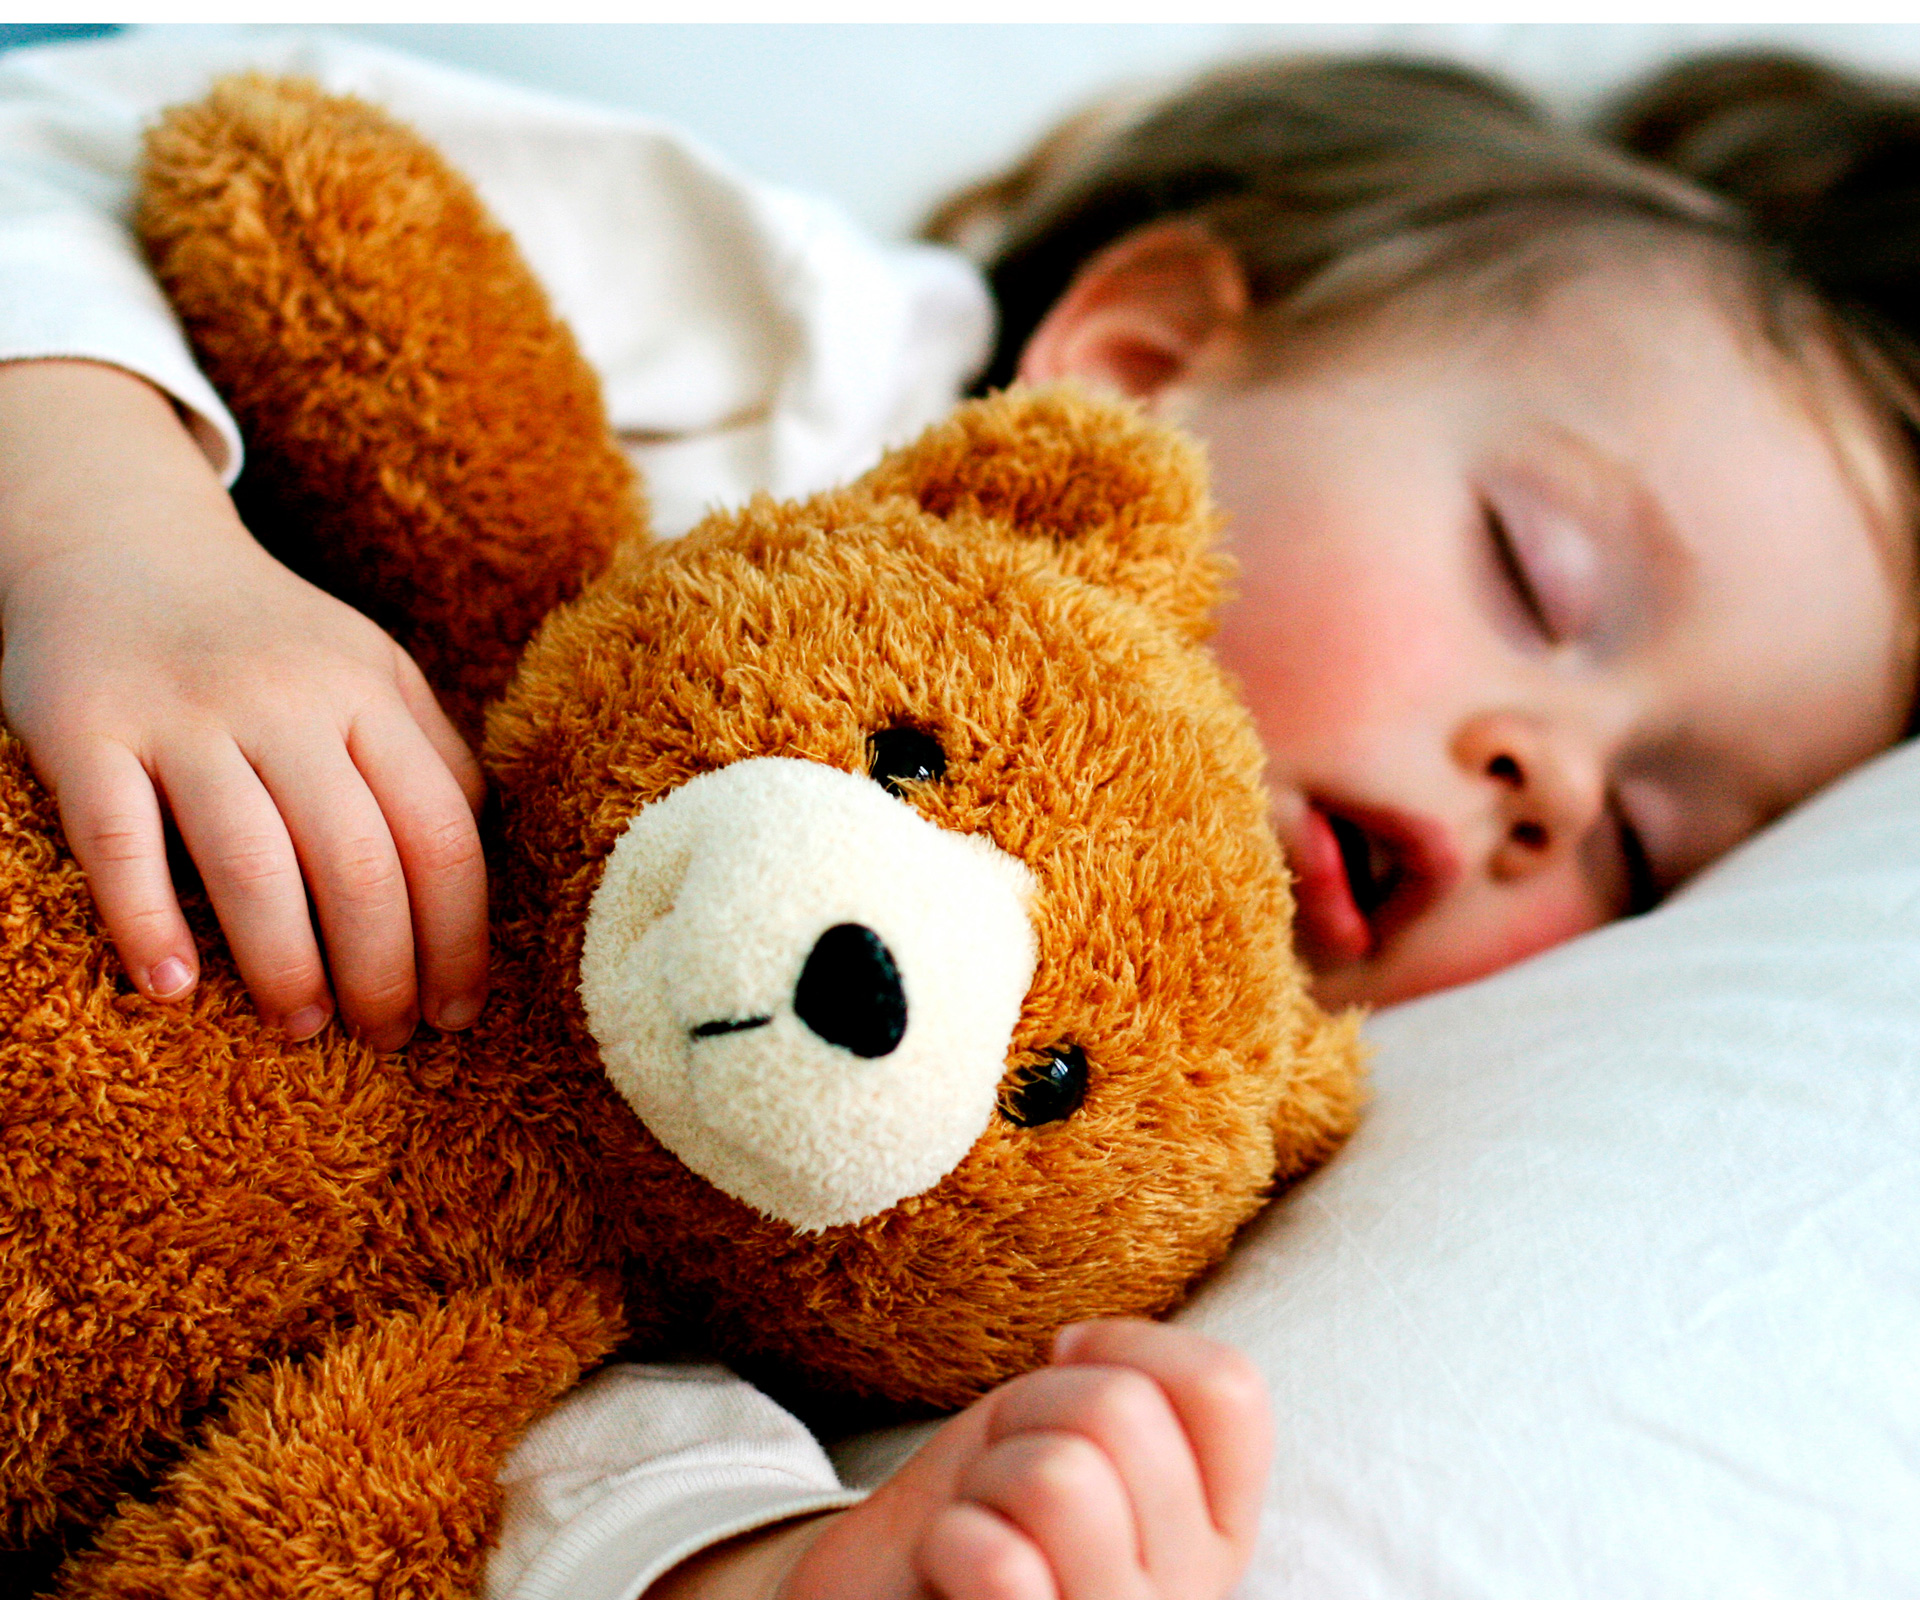 Child sleeping with teddy bear